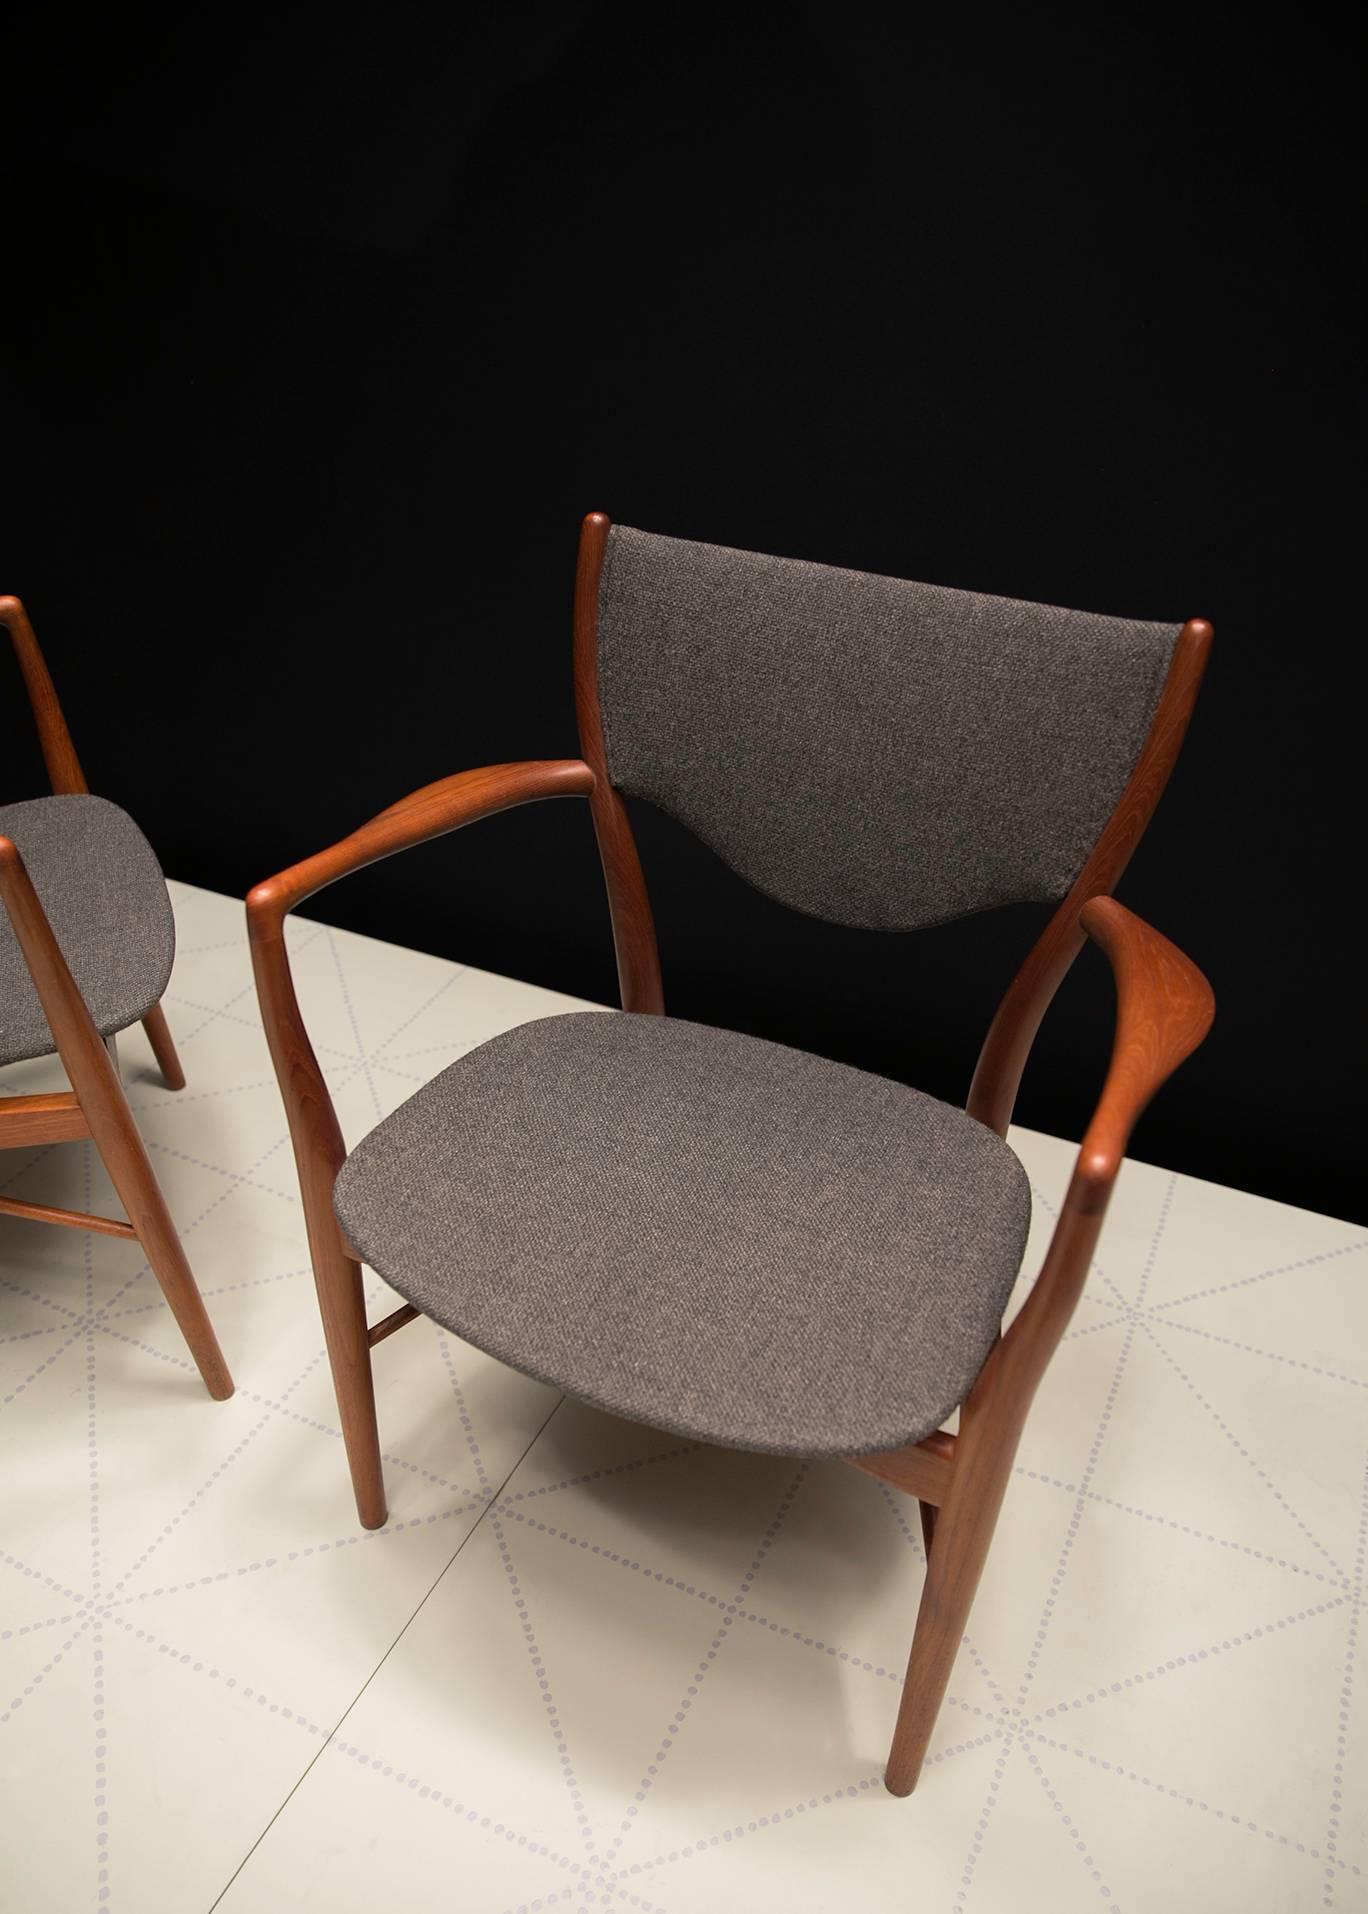 Danish Pair of Finn Juhl BO-46 Chairs in Teak and Original Charcoal Wool Seats For Sale